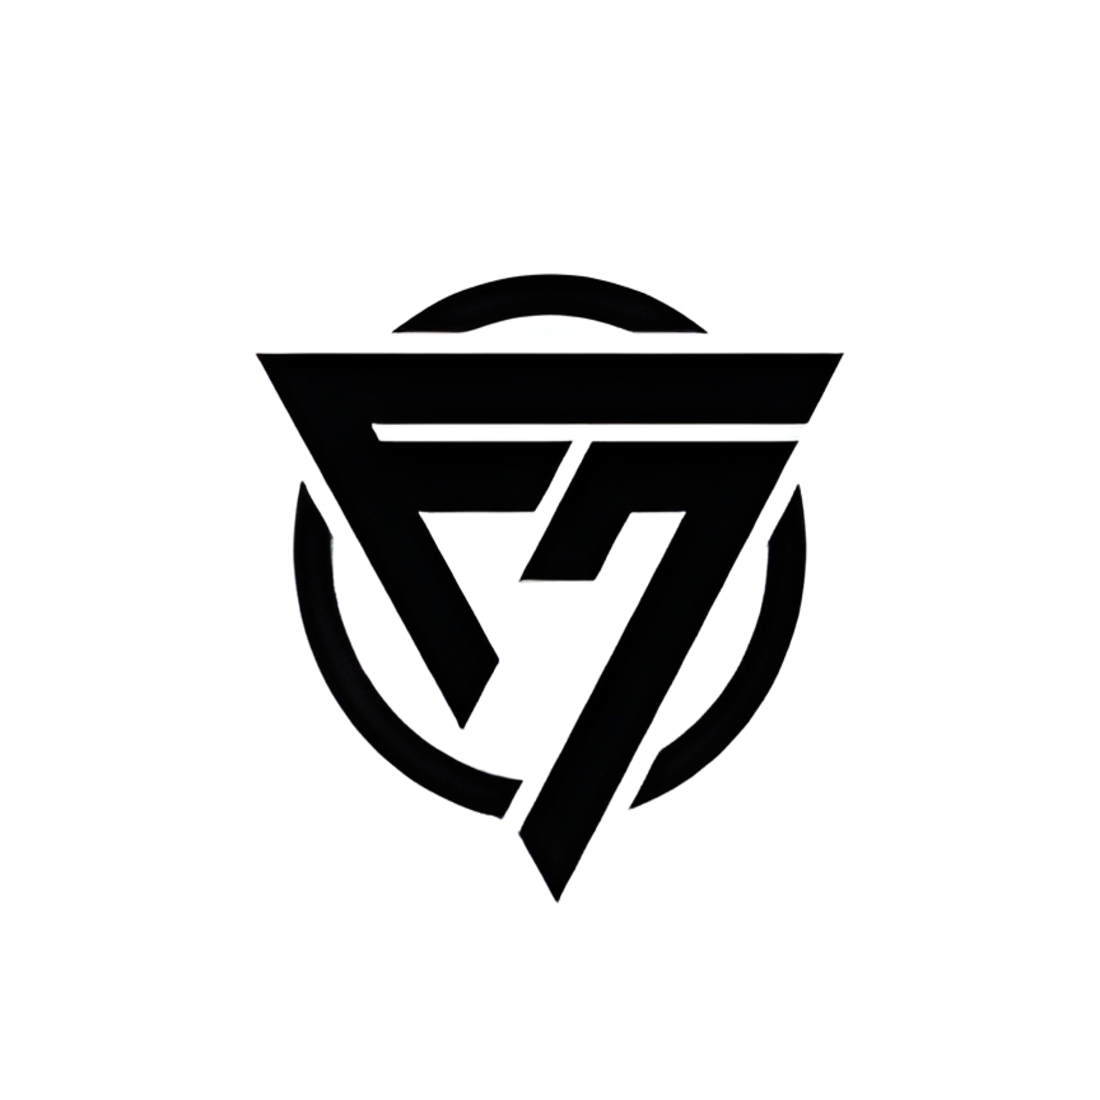 F 7 logo with faiz name cover image.